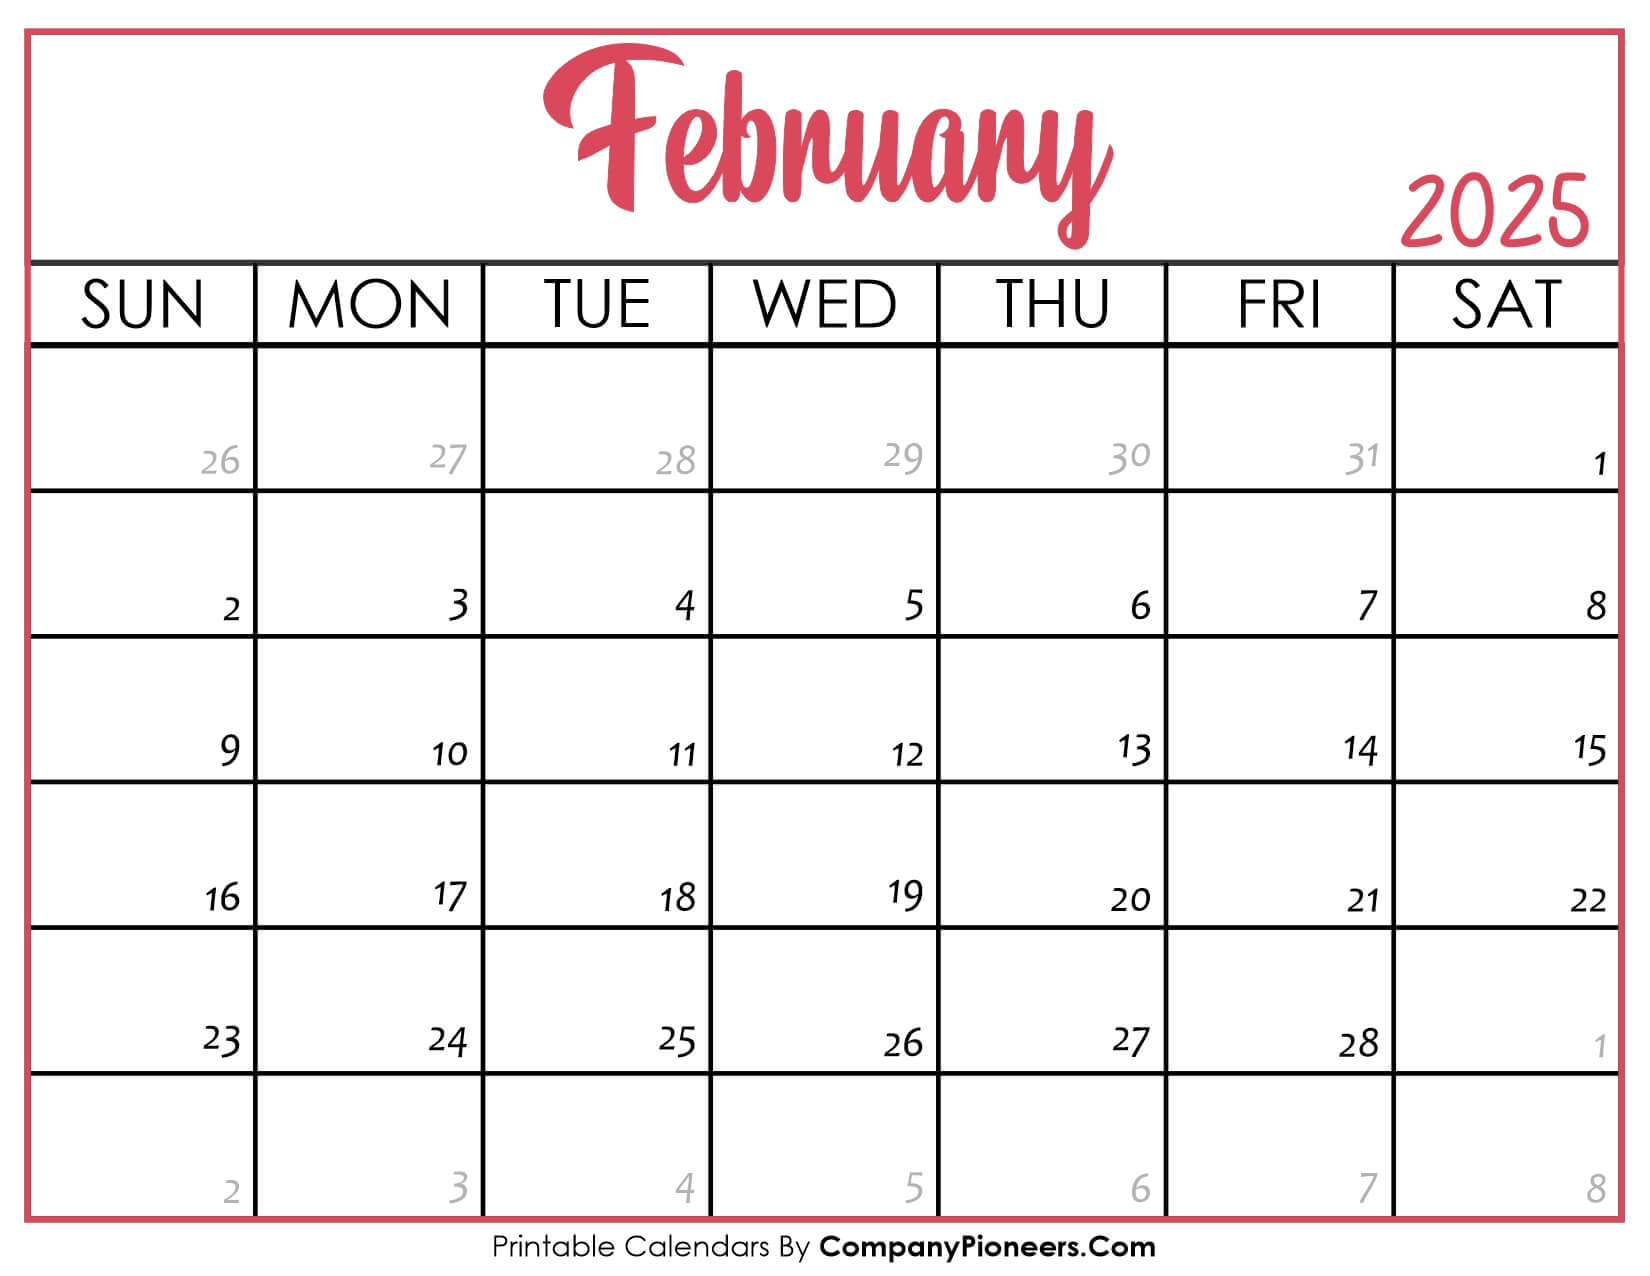 February 2025 Calendar Printable Pink Header